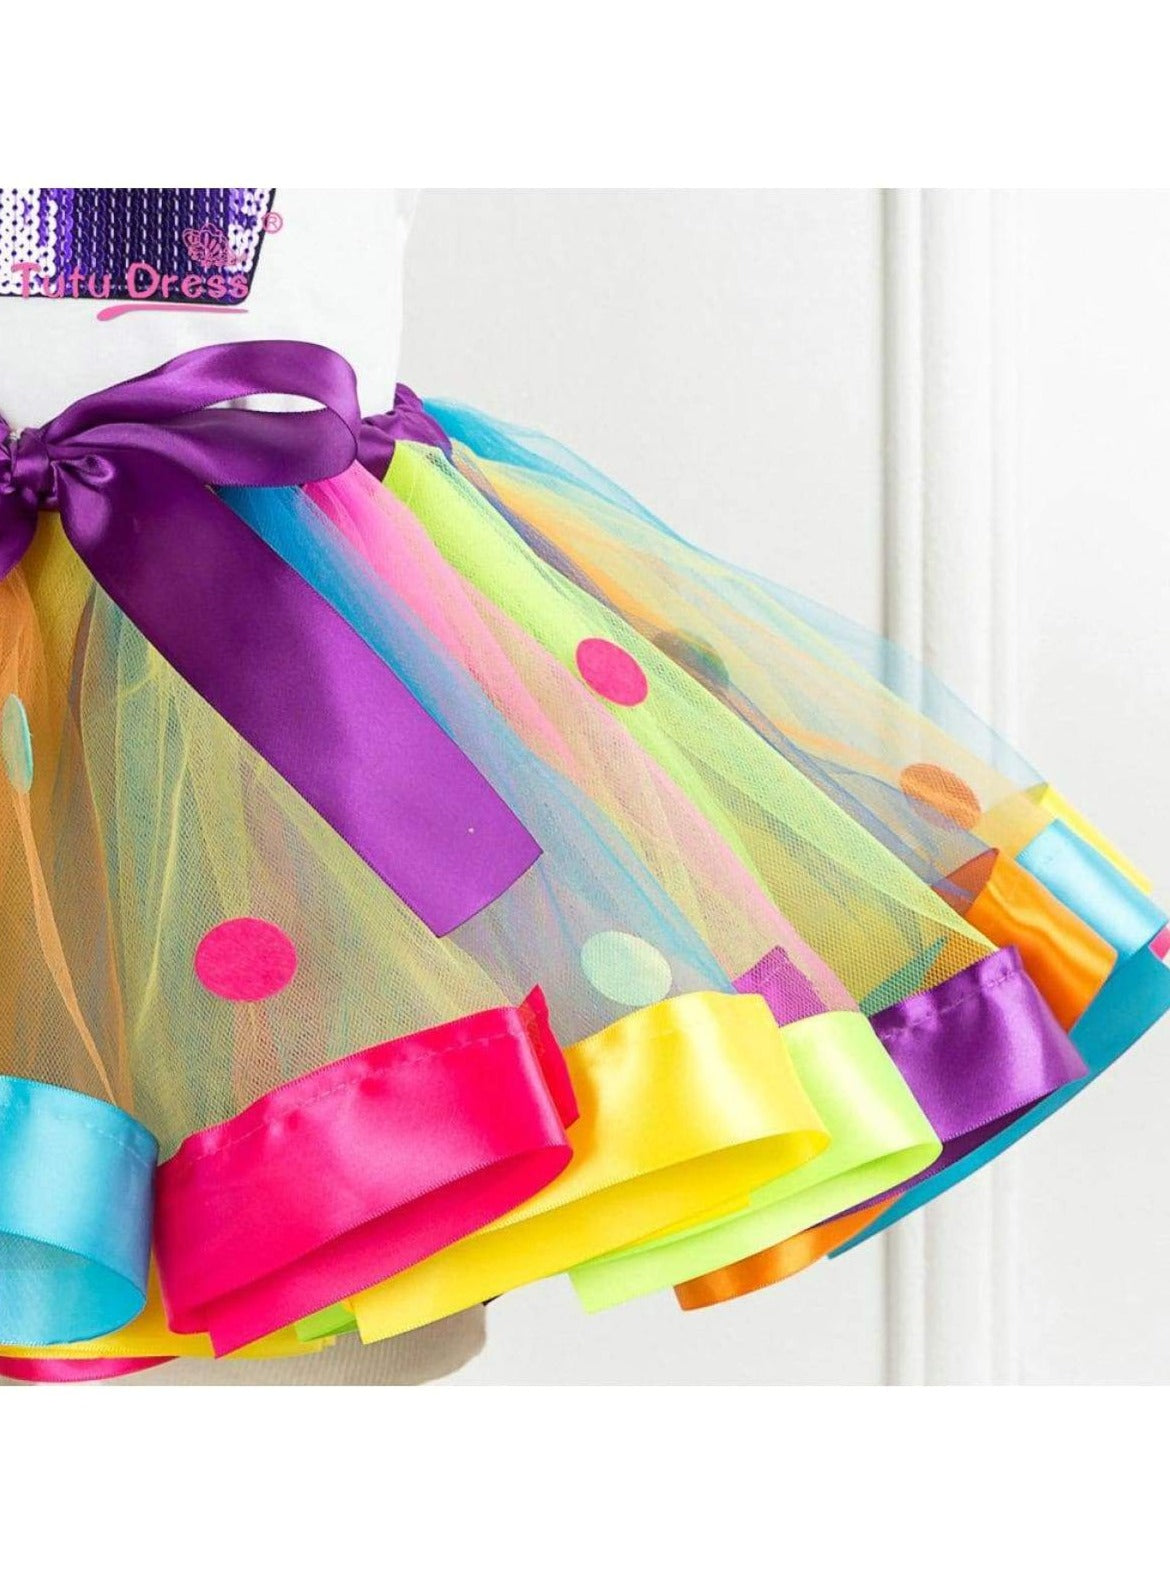 Girls Summer Clothes | Sequin Cupcake Tee & Rainbow Tutu Skirt Set